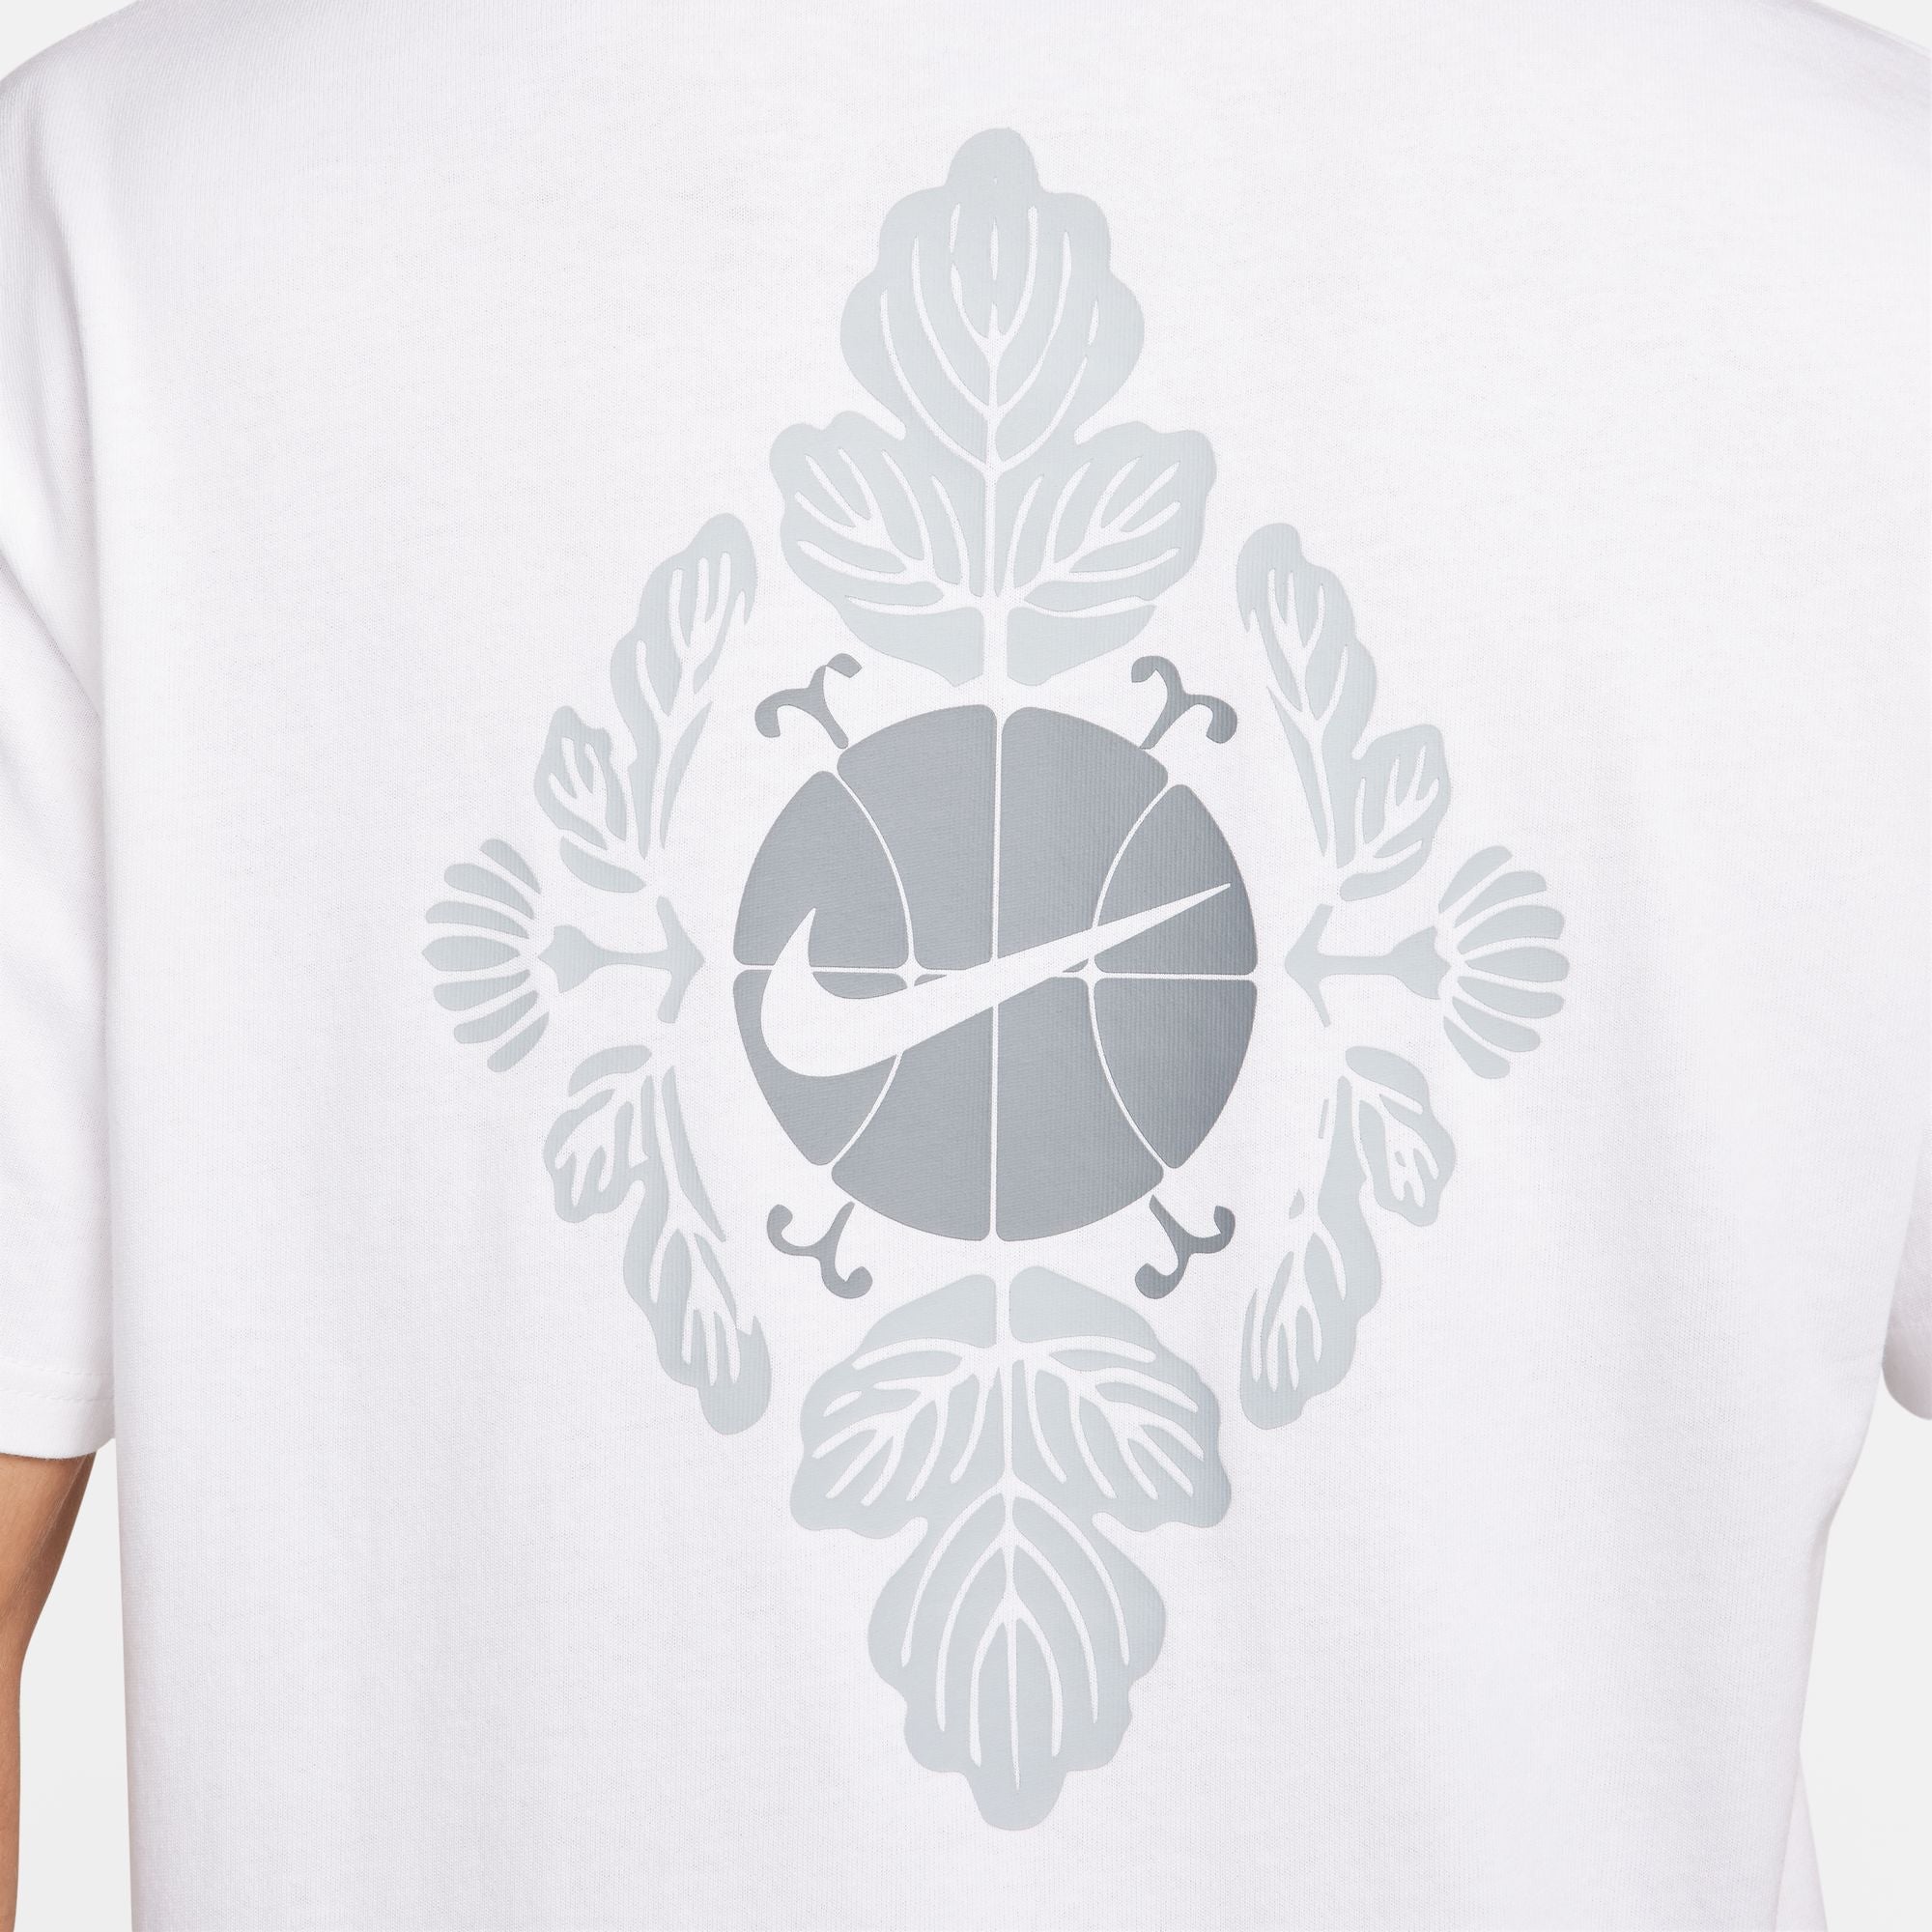 Nike Max90 Basketball T-Shirt 'White'